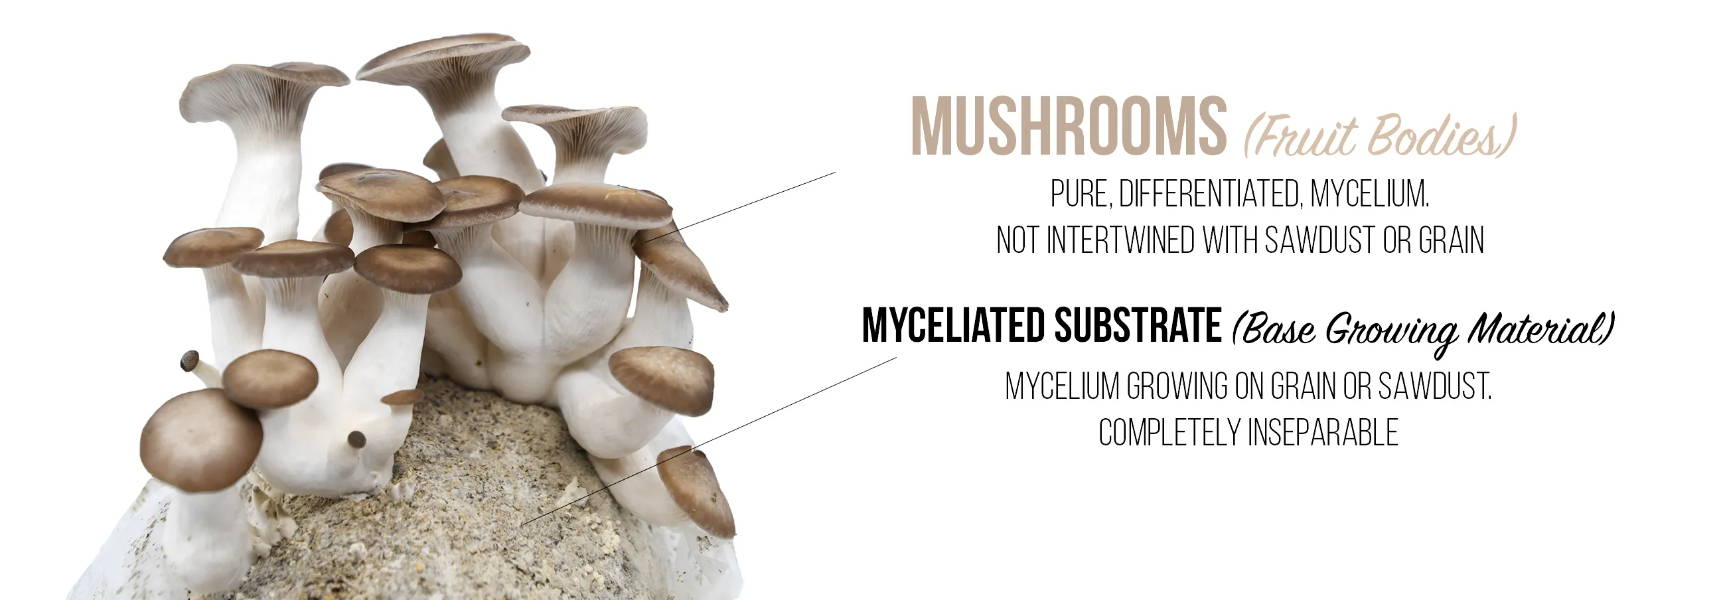 mushroom fruit bodies vs. myceliated substrate